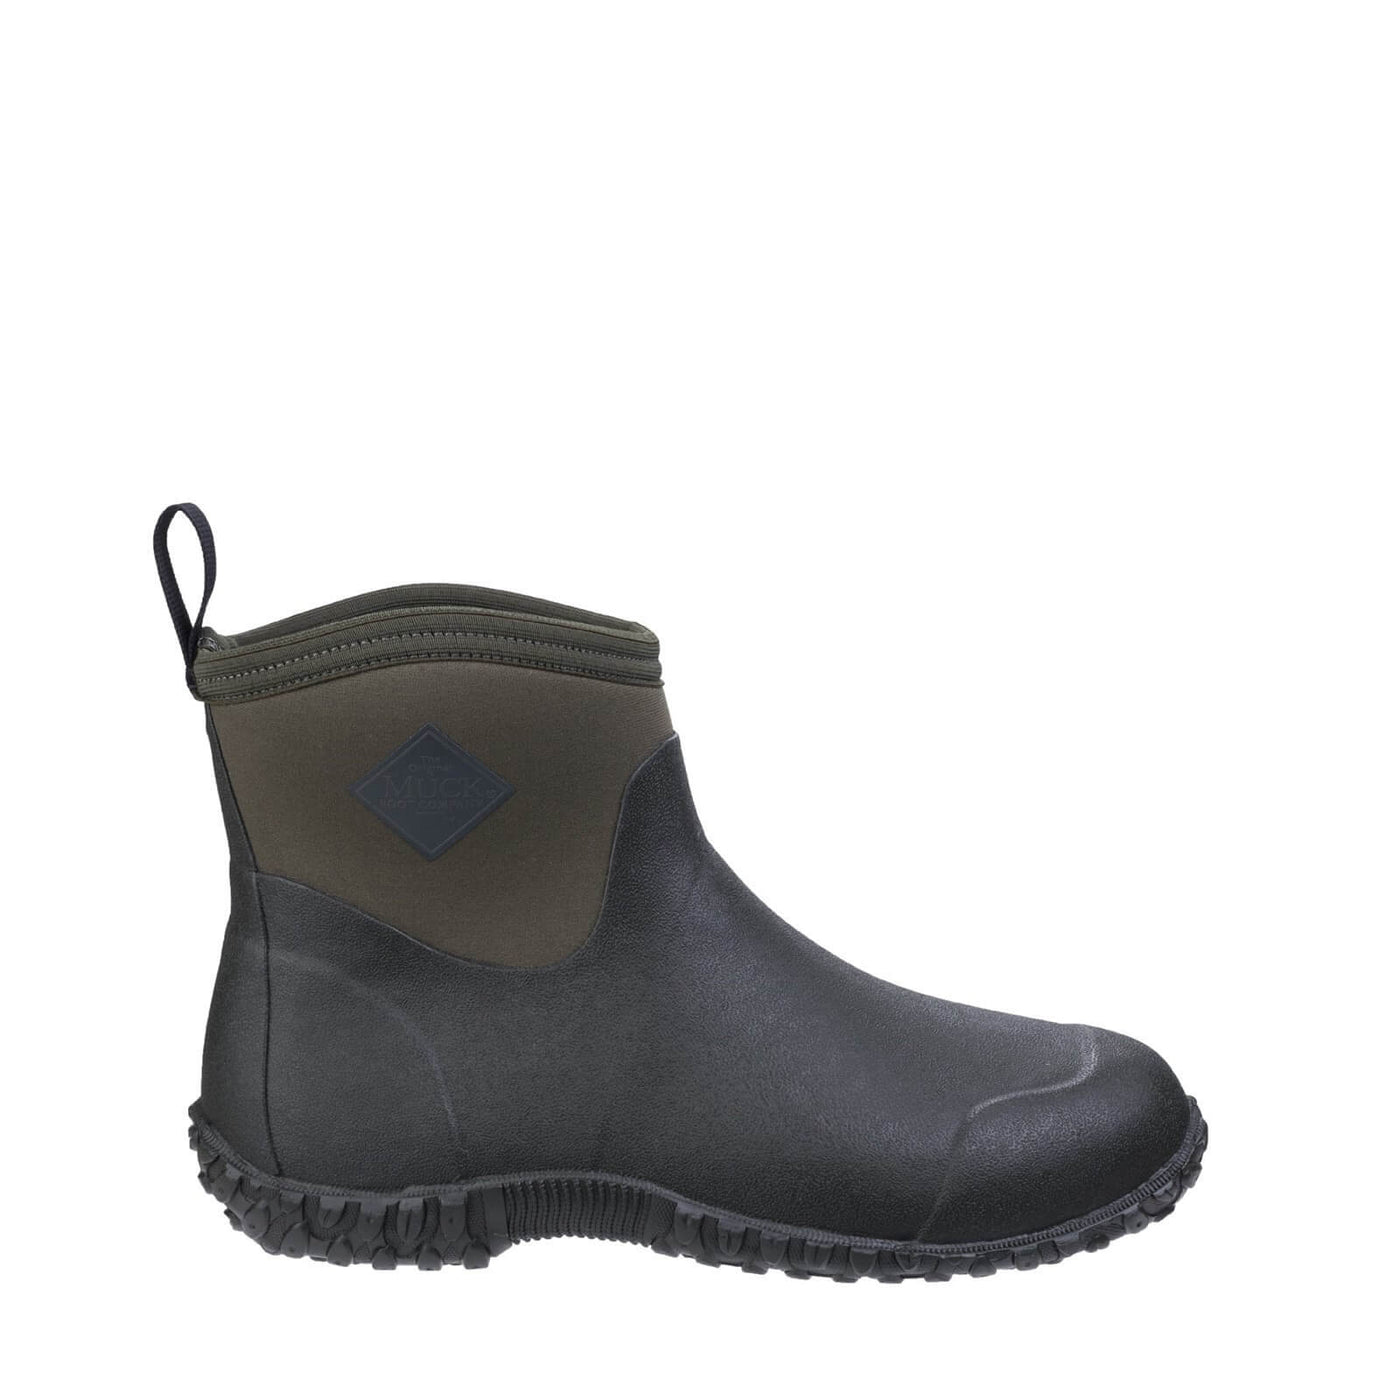 Muck Boots Muckster II Ankle All Purpose Lightweight Shoes Black/Moss 8#colour_black-moss